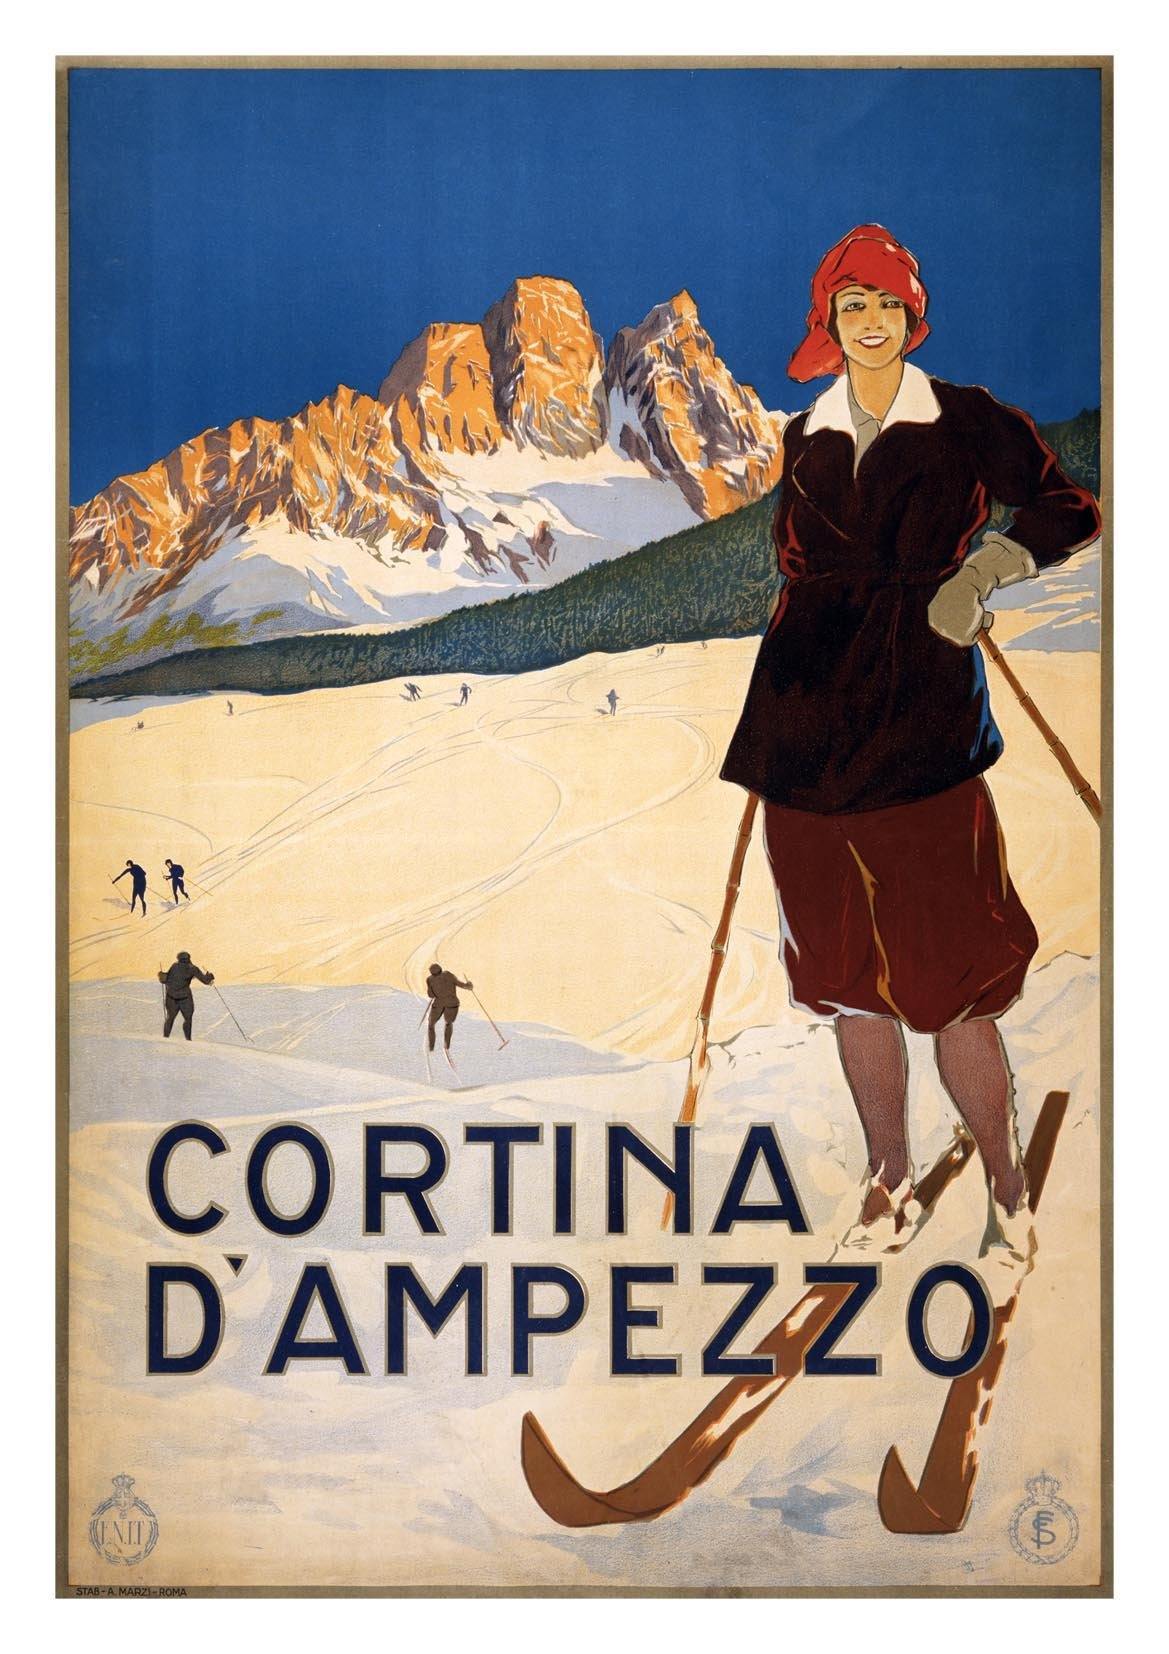 CORTINA D'AMPEZZO POSTER: Vintage Italy Ski Print - Pimlico Prints